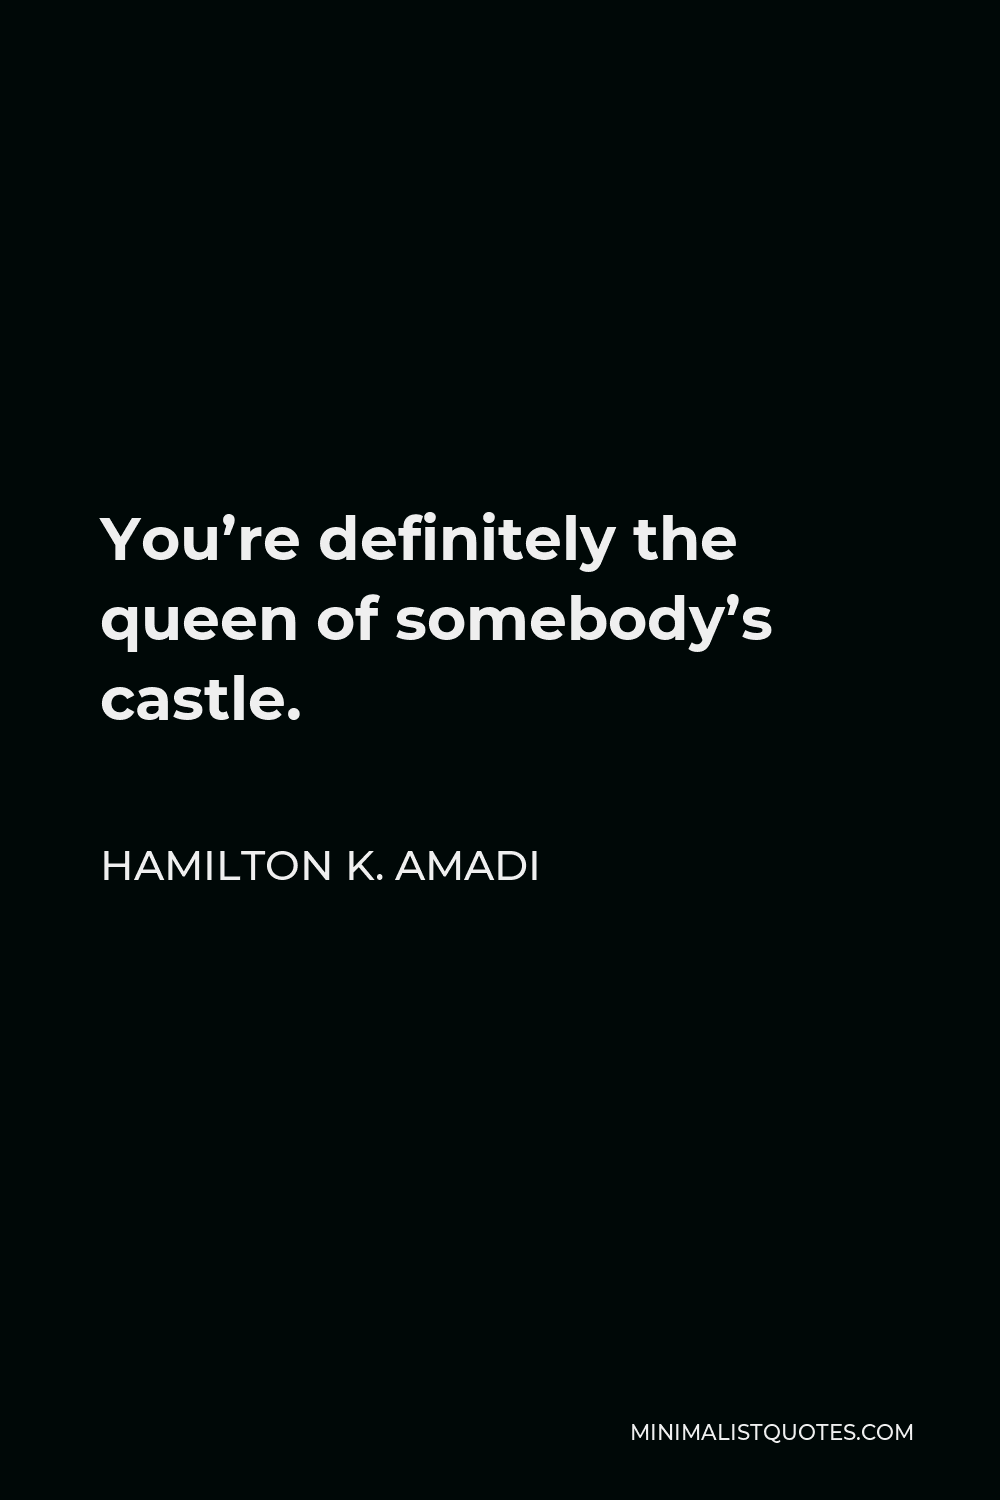 Hamilton K. Amadi Quote - You’re definitely the queen of somebody’s castle.